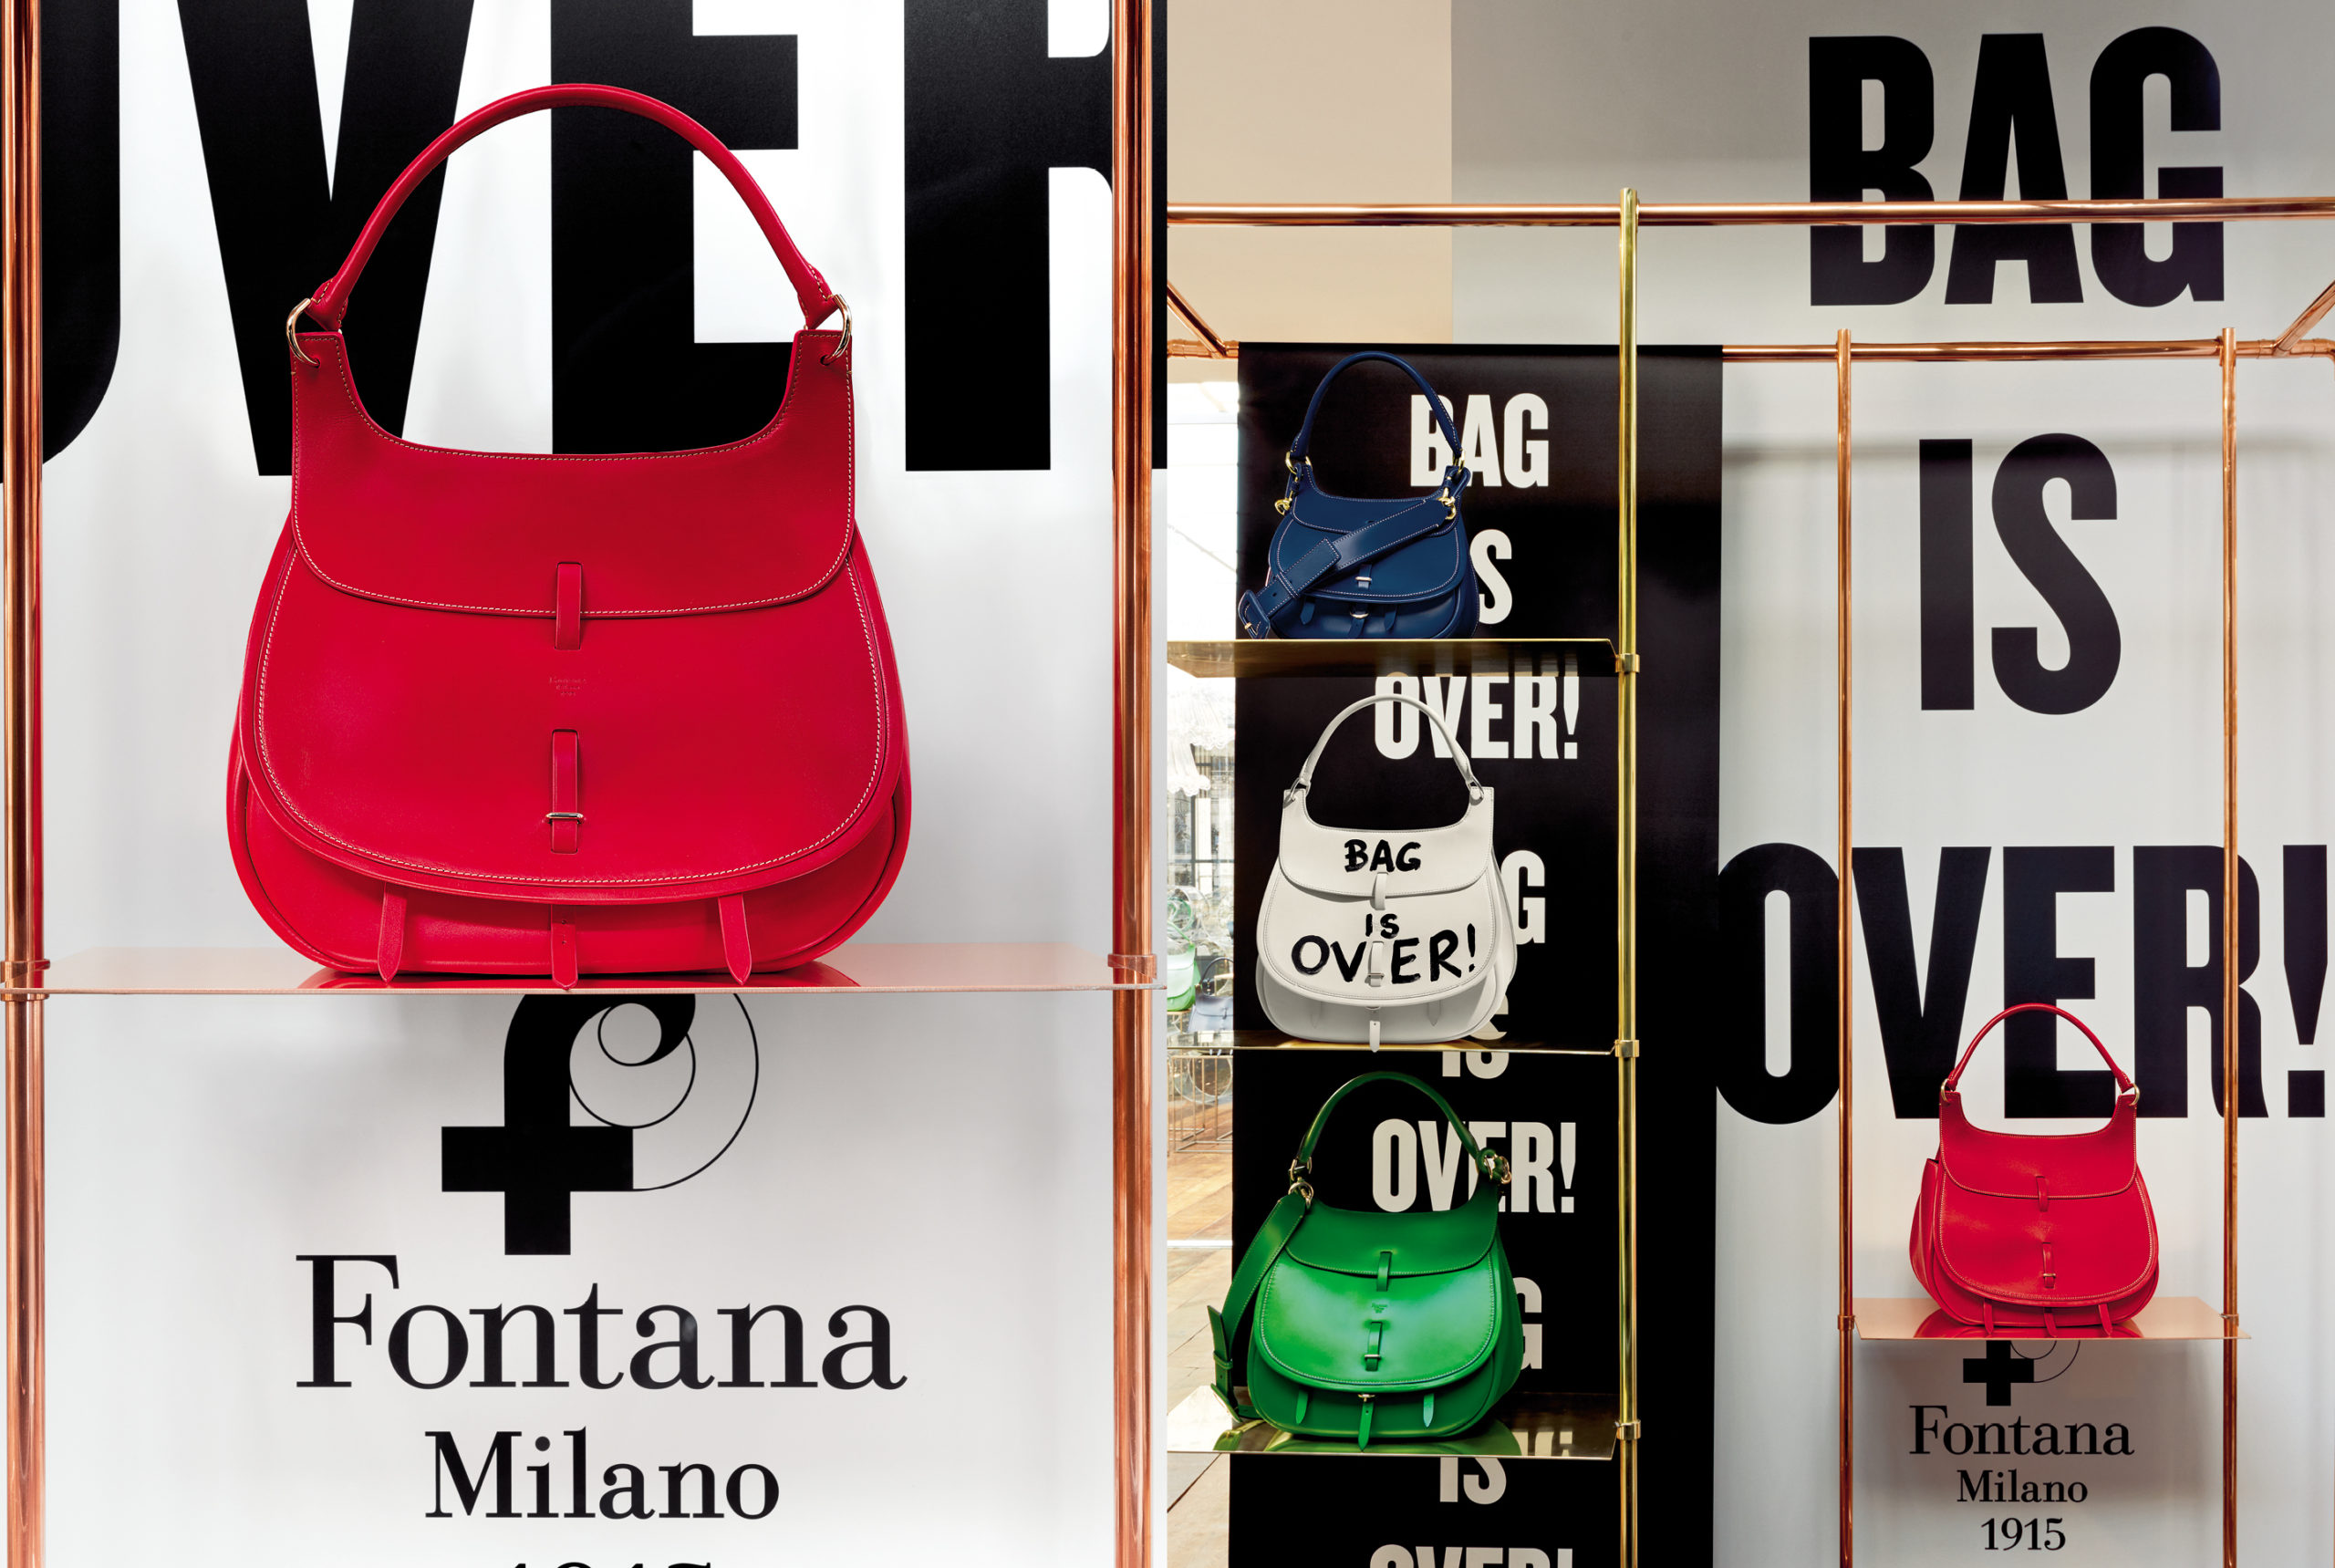 Fontana Milano 1915 red and green bag, brass window display design